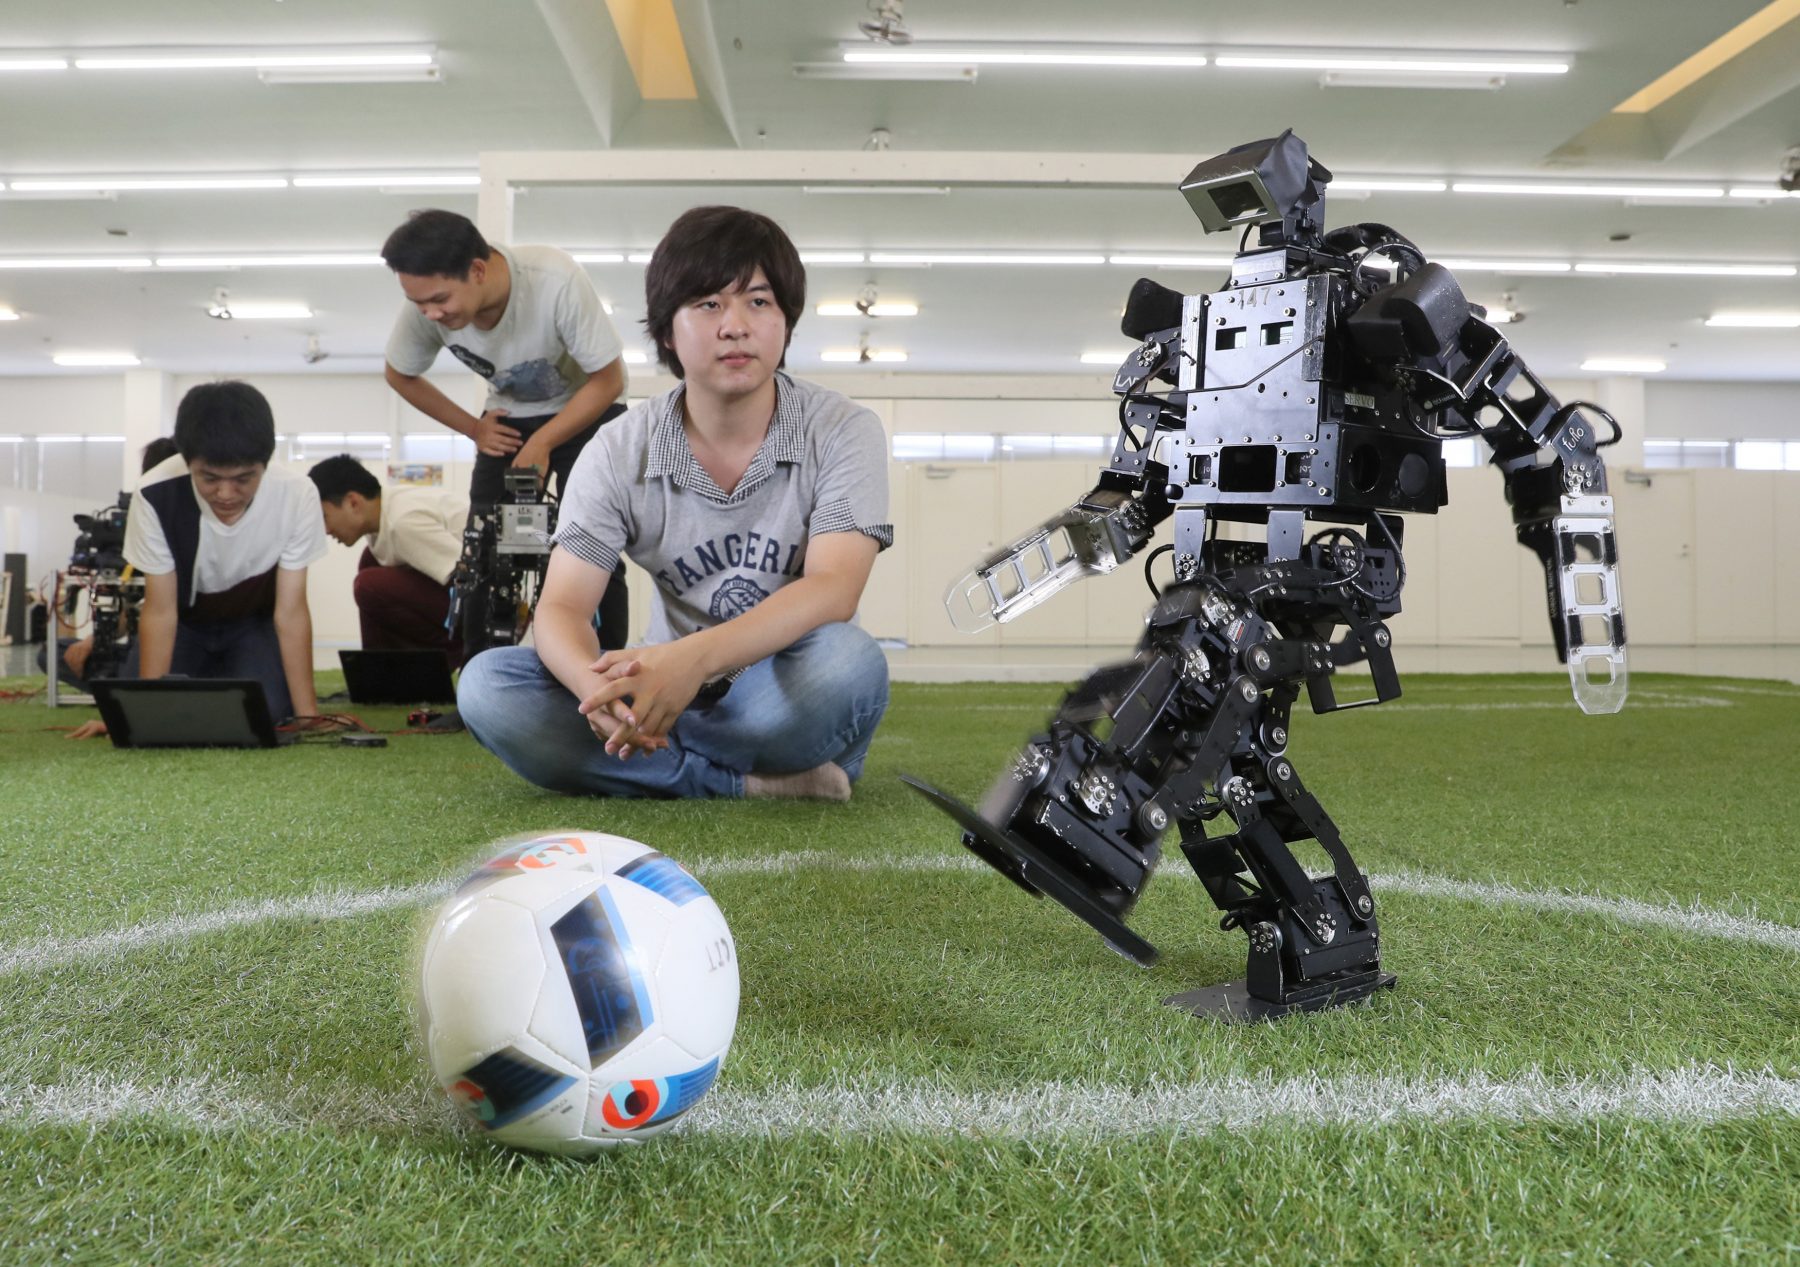 Jogo de futebol com robô. Foto de Reiri Kurihara/ Yomiuri/ The Yomiuri Shimbun/ AFP